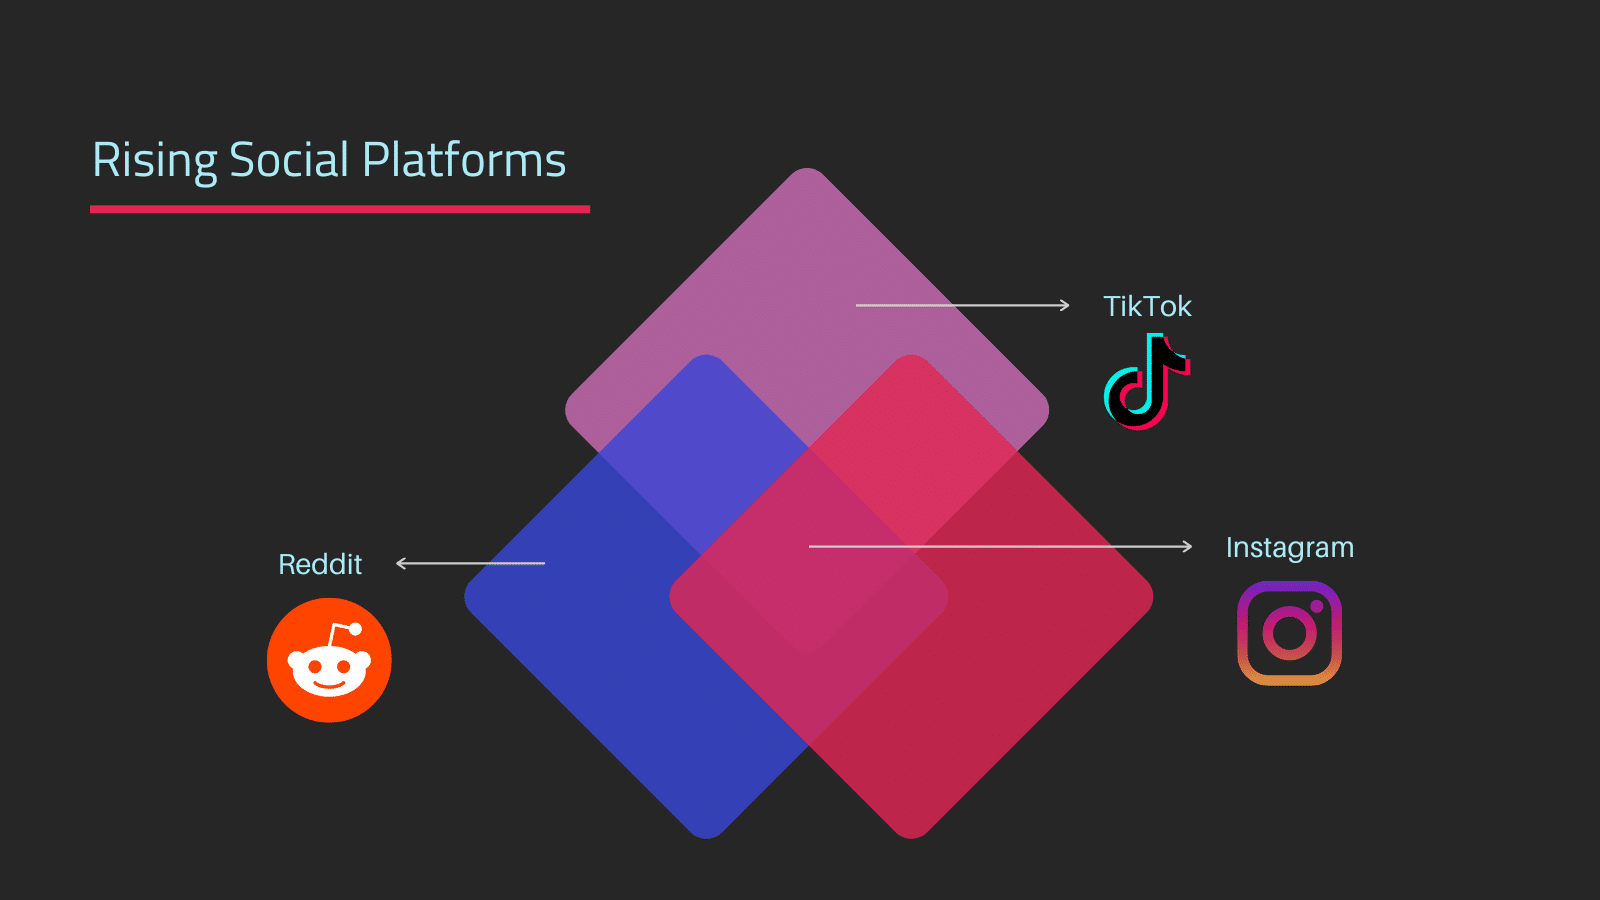 Venn diagram of rising social platforms including TikTok, Instagram, and Reddit